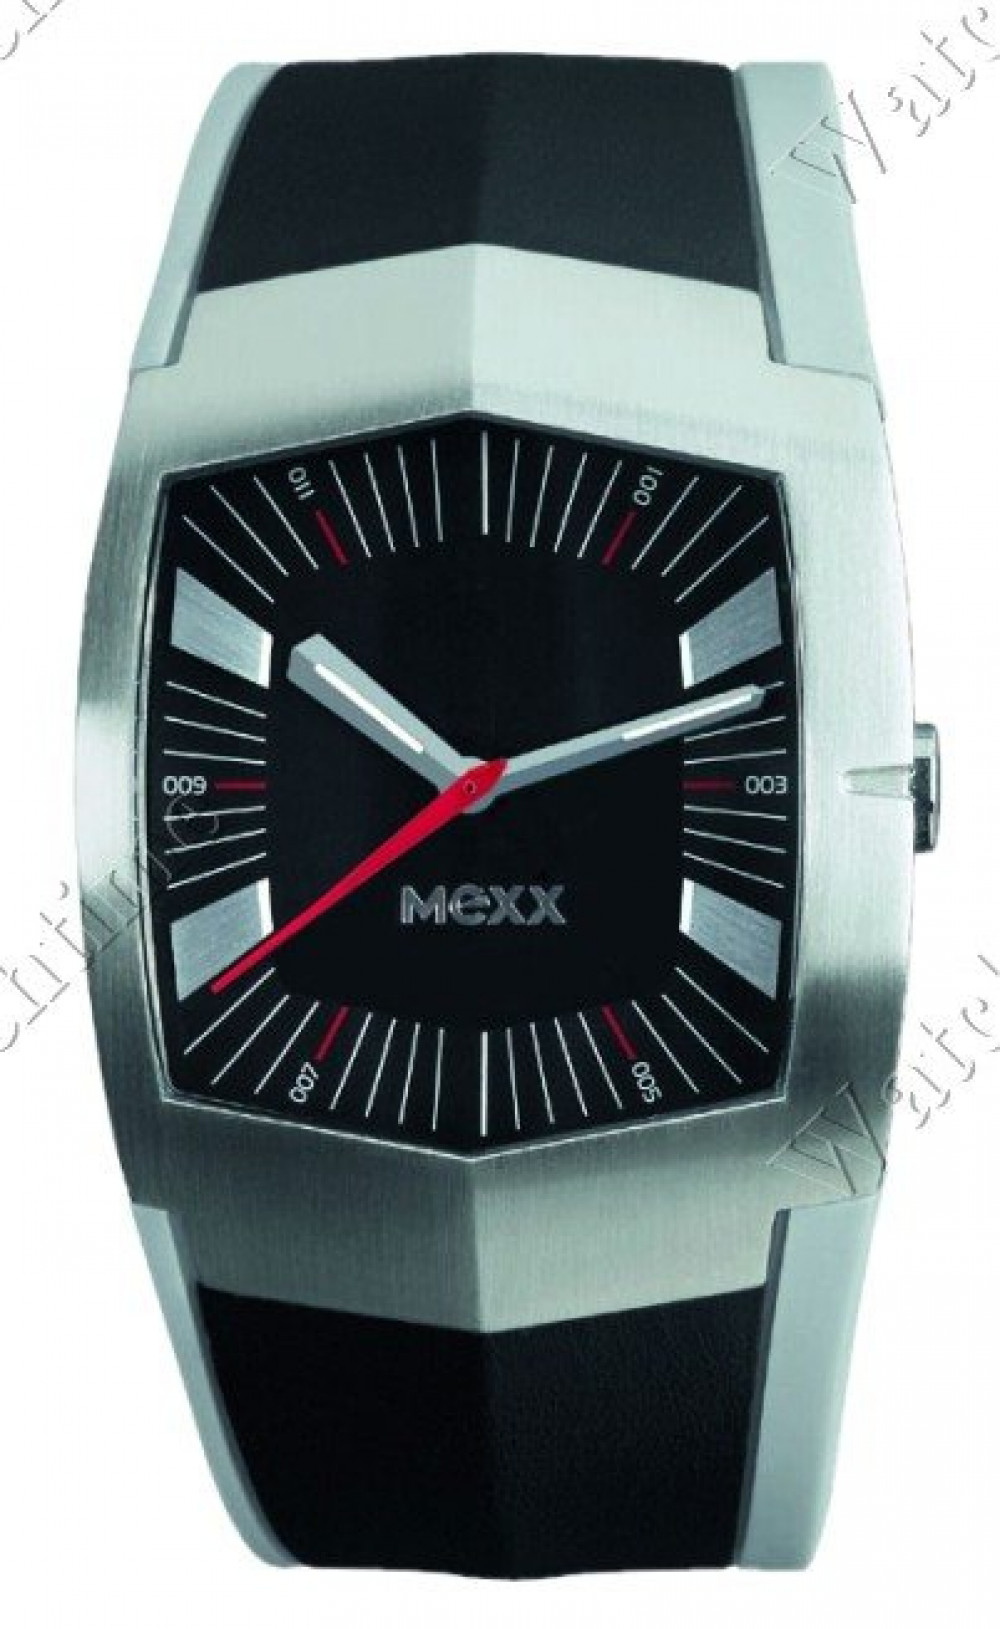 Zegarek firmy Mexx Time, model Speedster